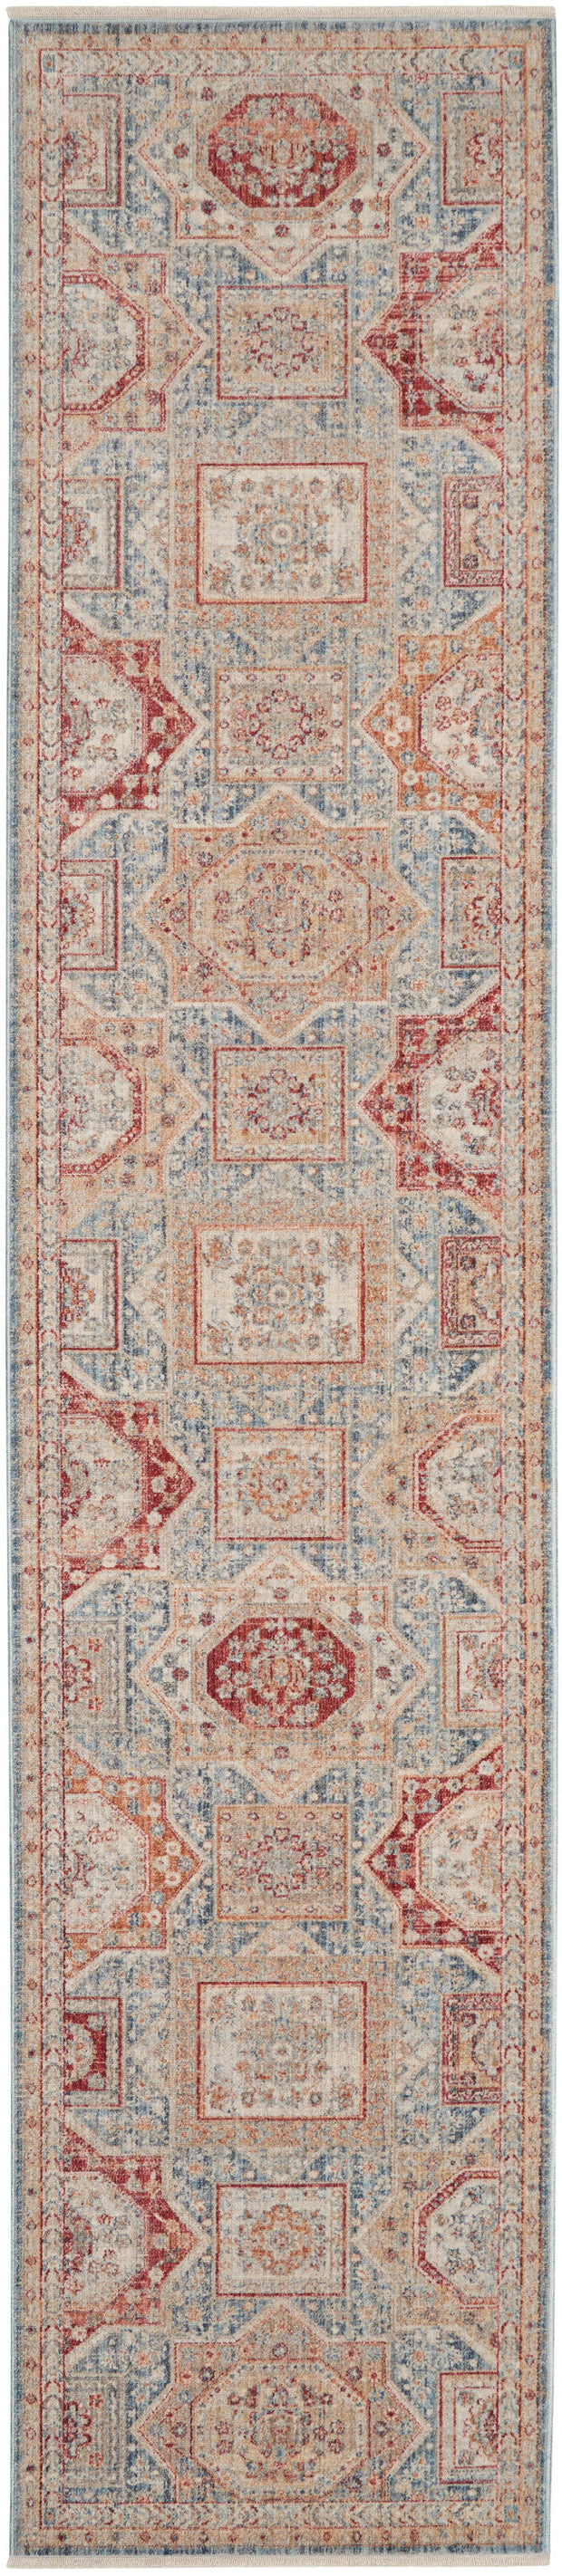 homestead blue multicolor rug by nourison 99446767608 redo 2